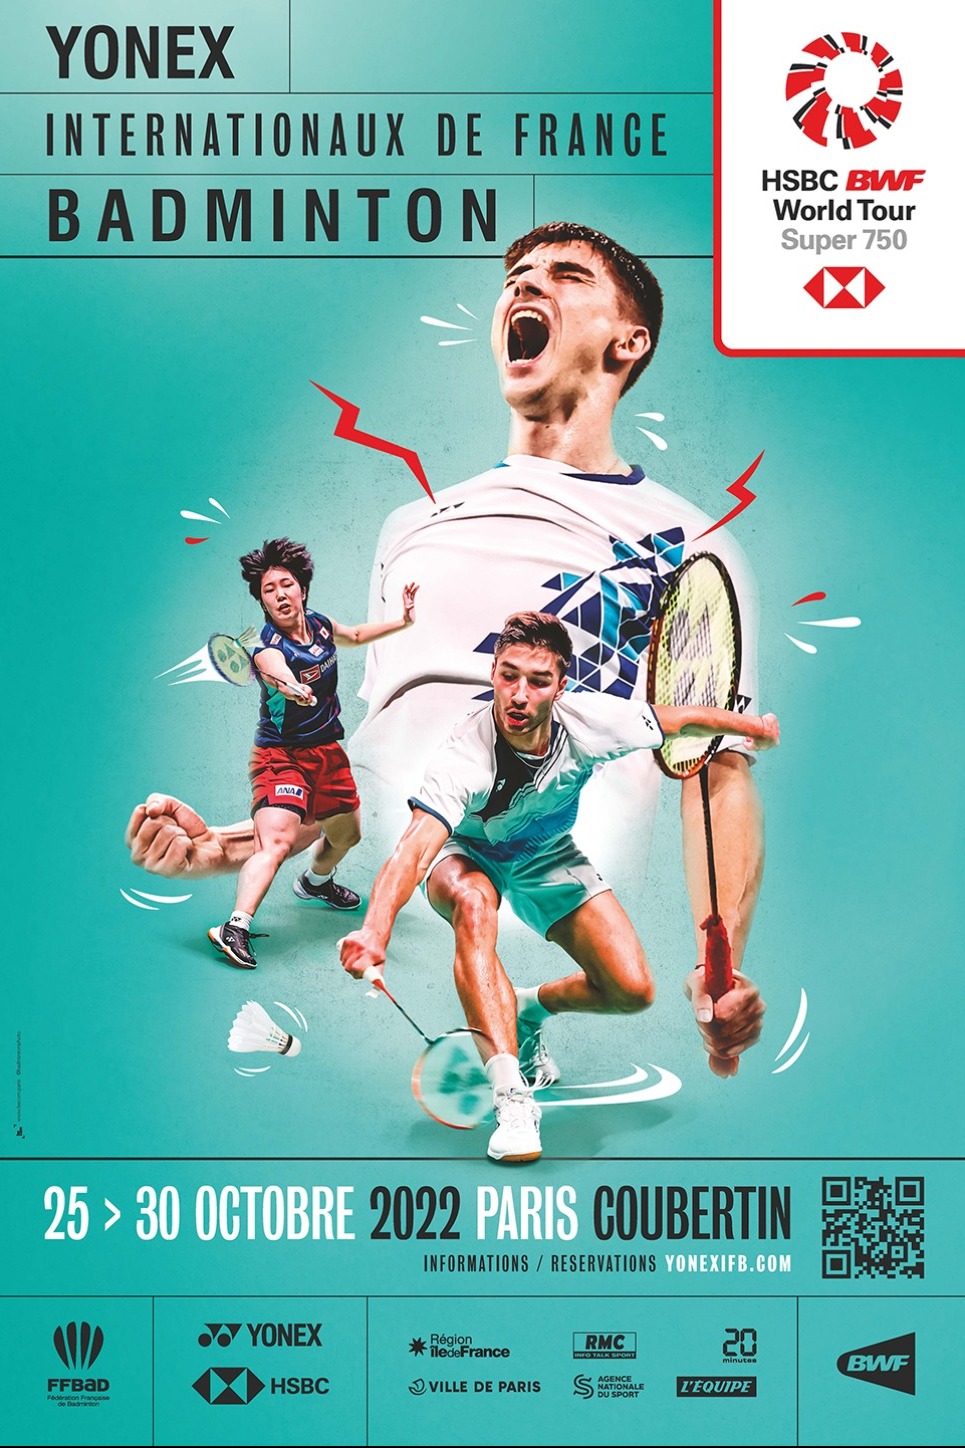 Yonex Internationaux de France de Badminton 2022